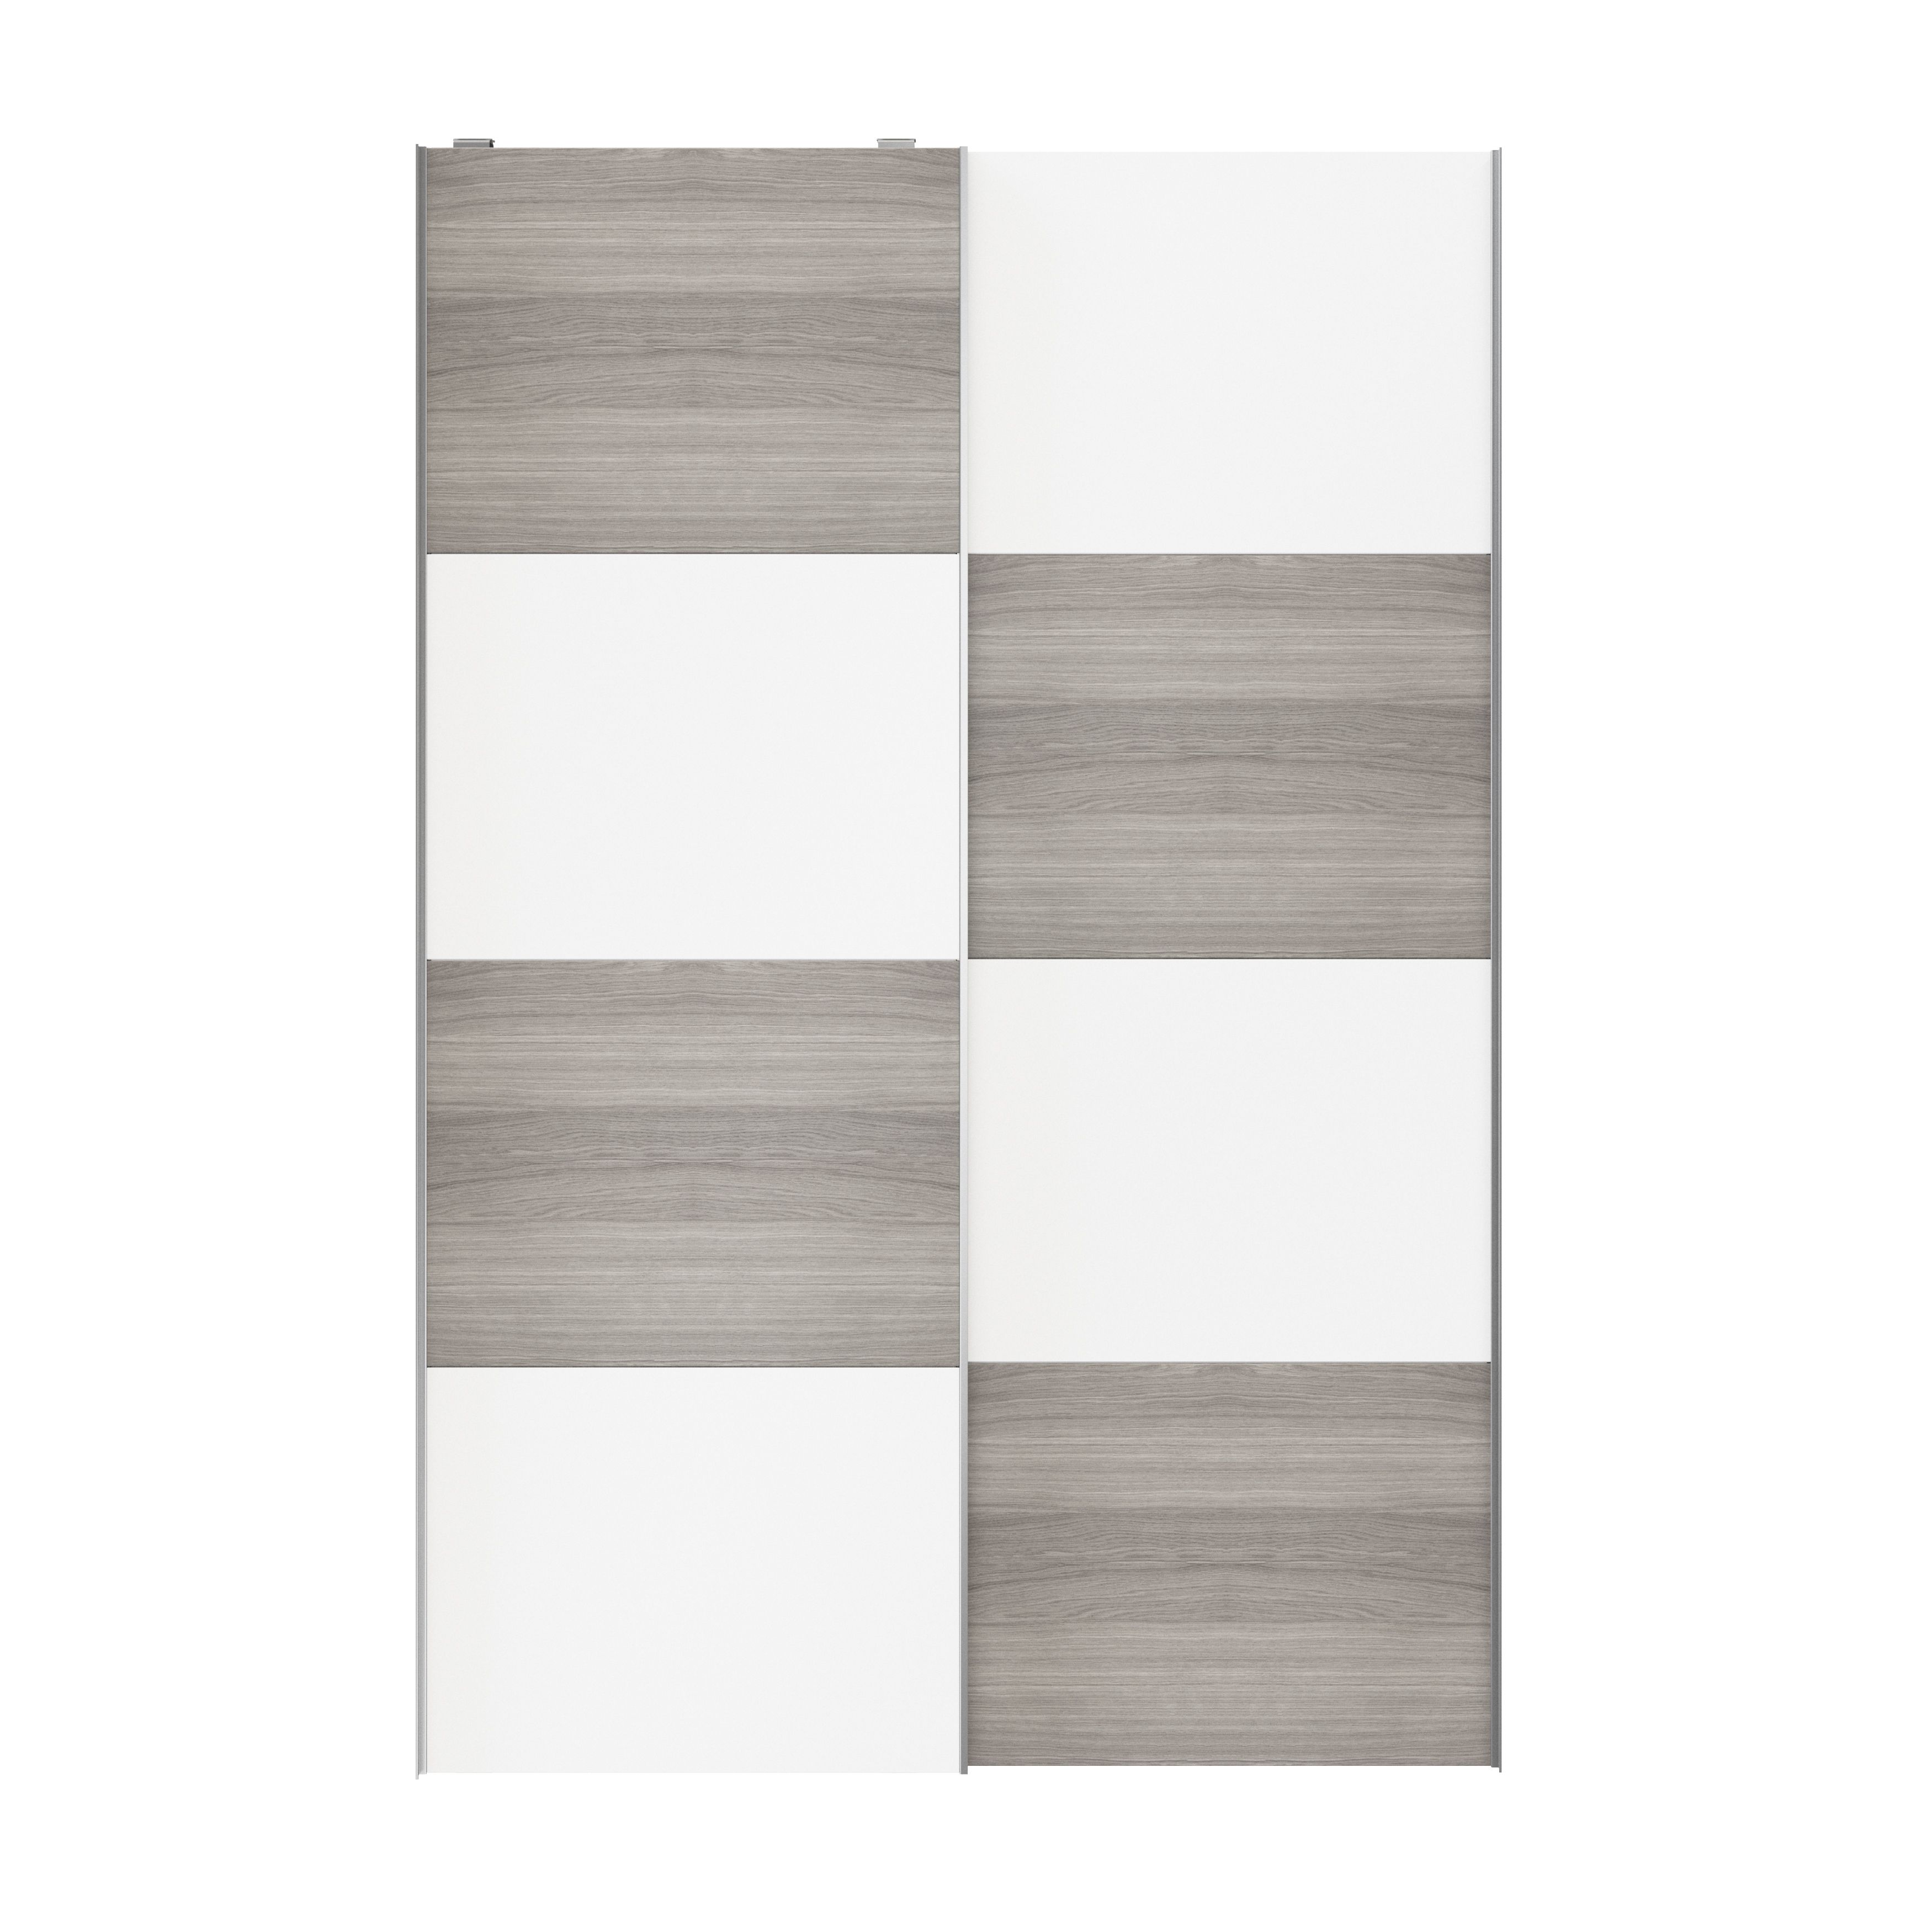 Atomia Panelled Grey & white oak effect 2 door Sliding Wardrobe Door kit (H)2250mm (W)1500mm